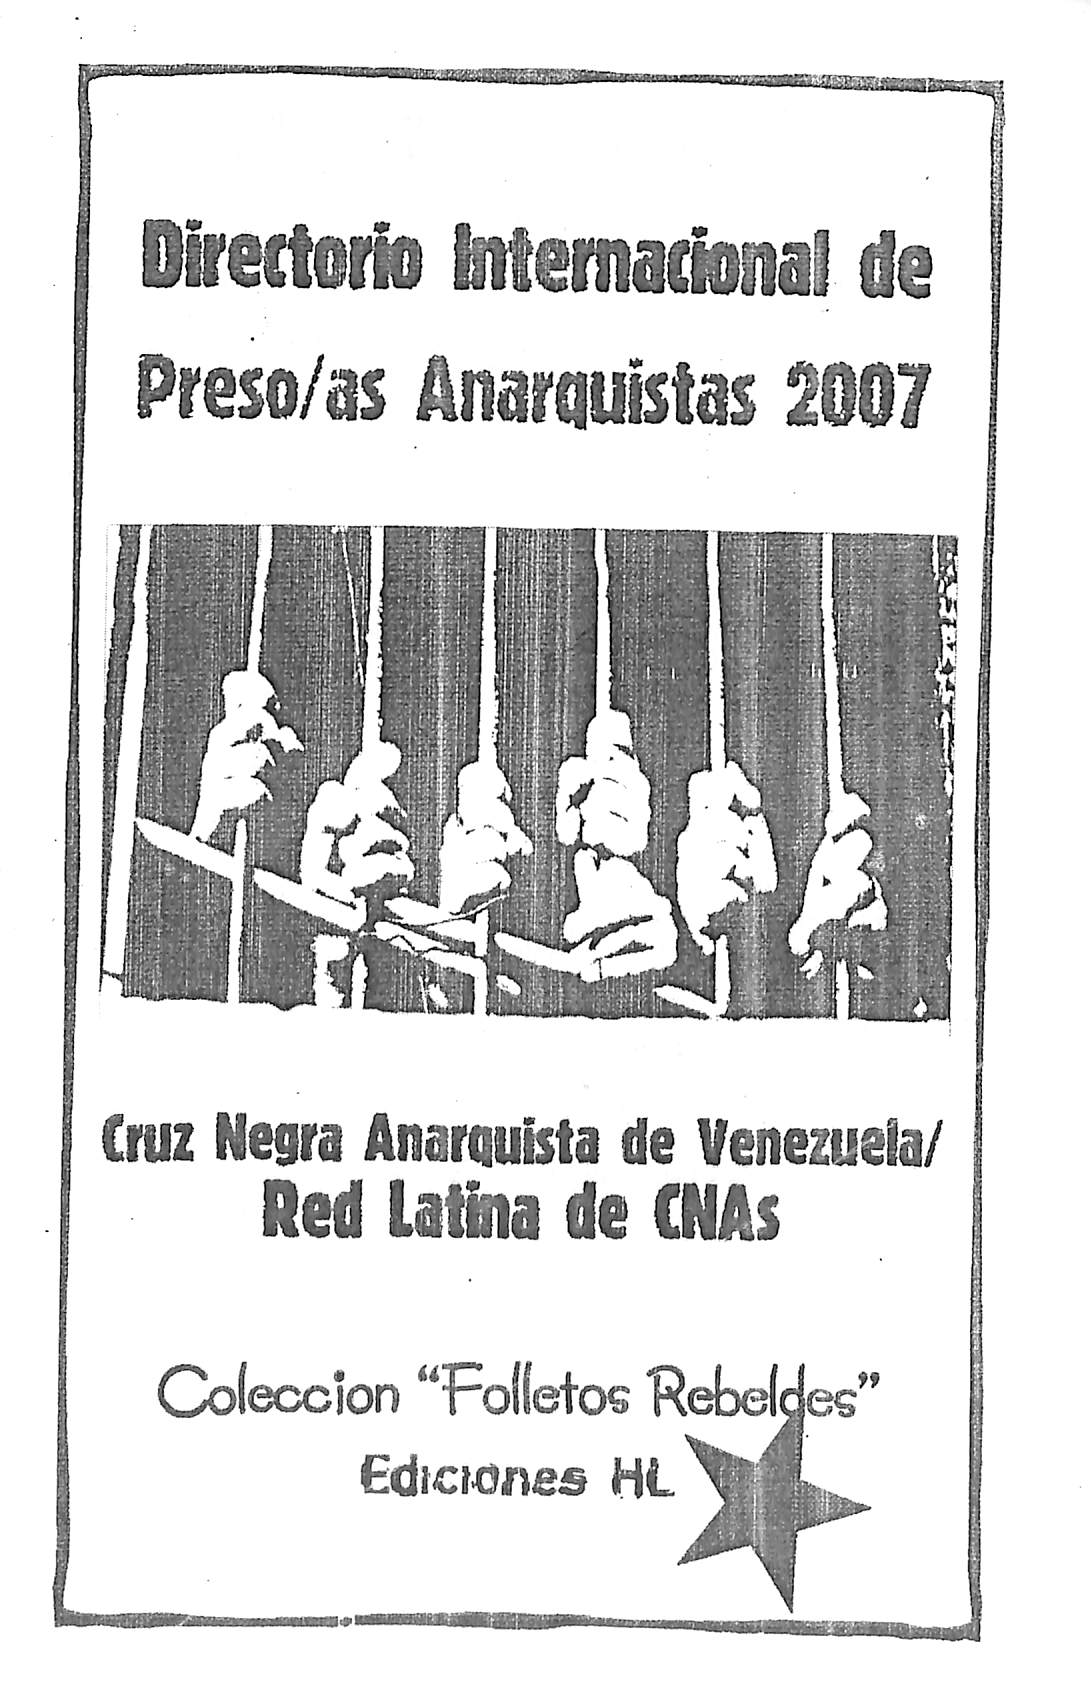 Directorio Internacional de Presos(as) Anarquistas, 2007 - Colección “Folletos Rebeldes”